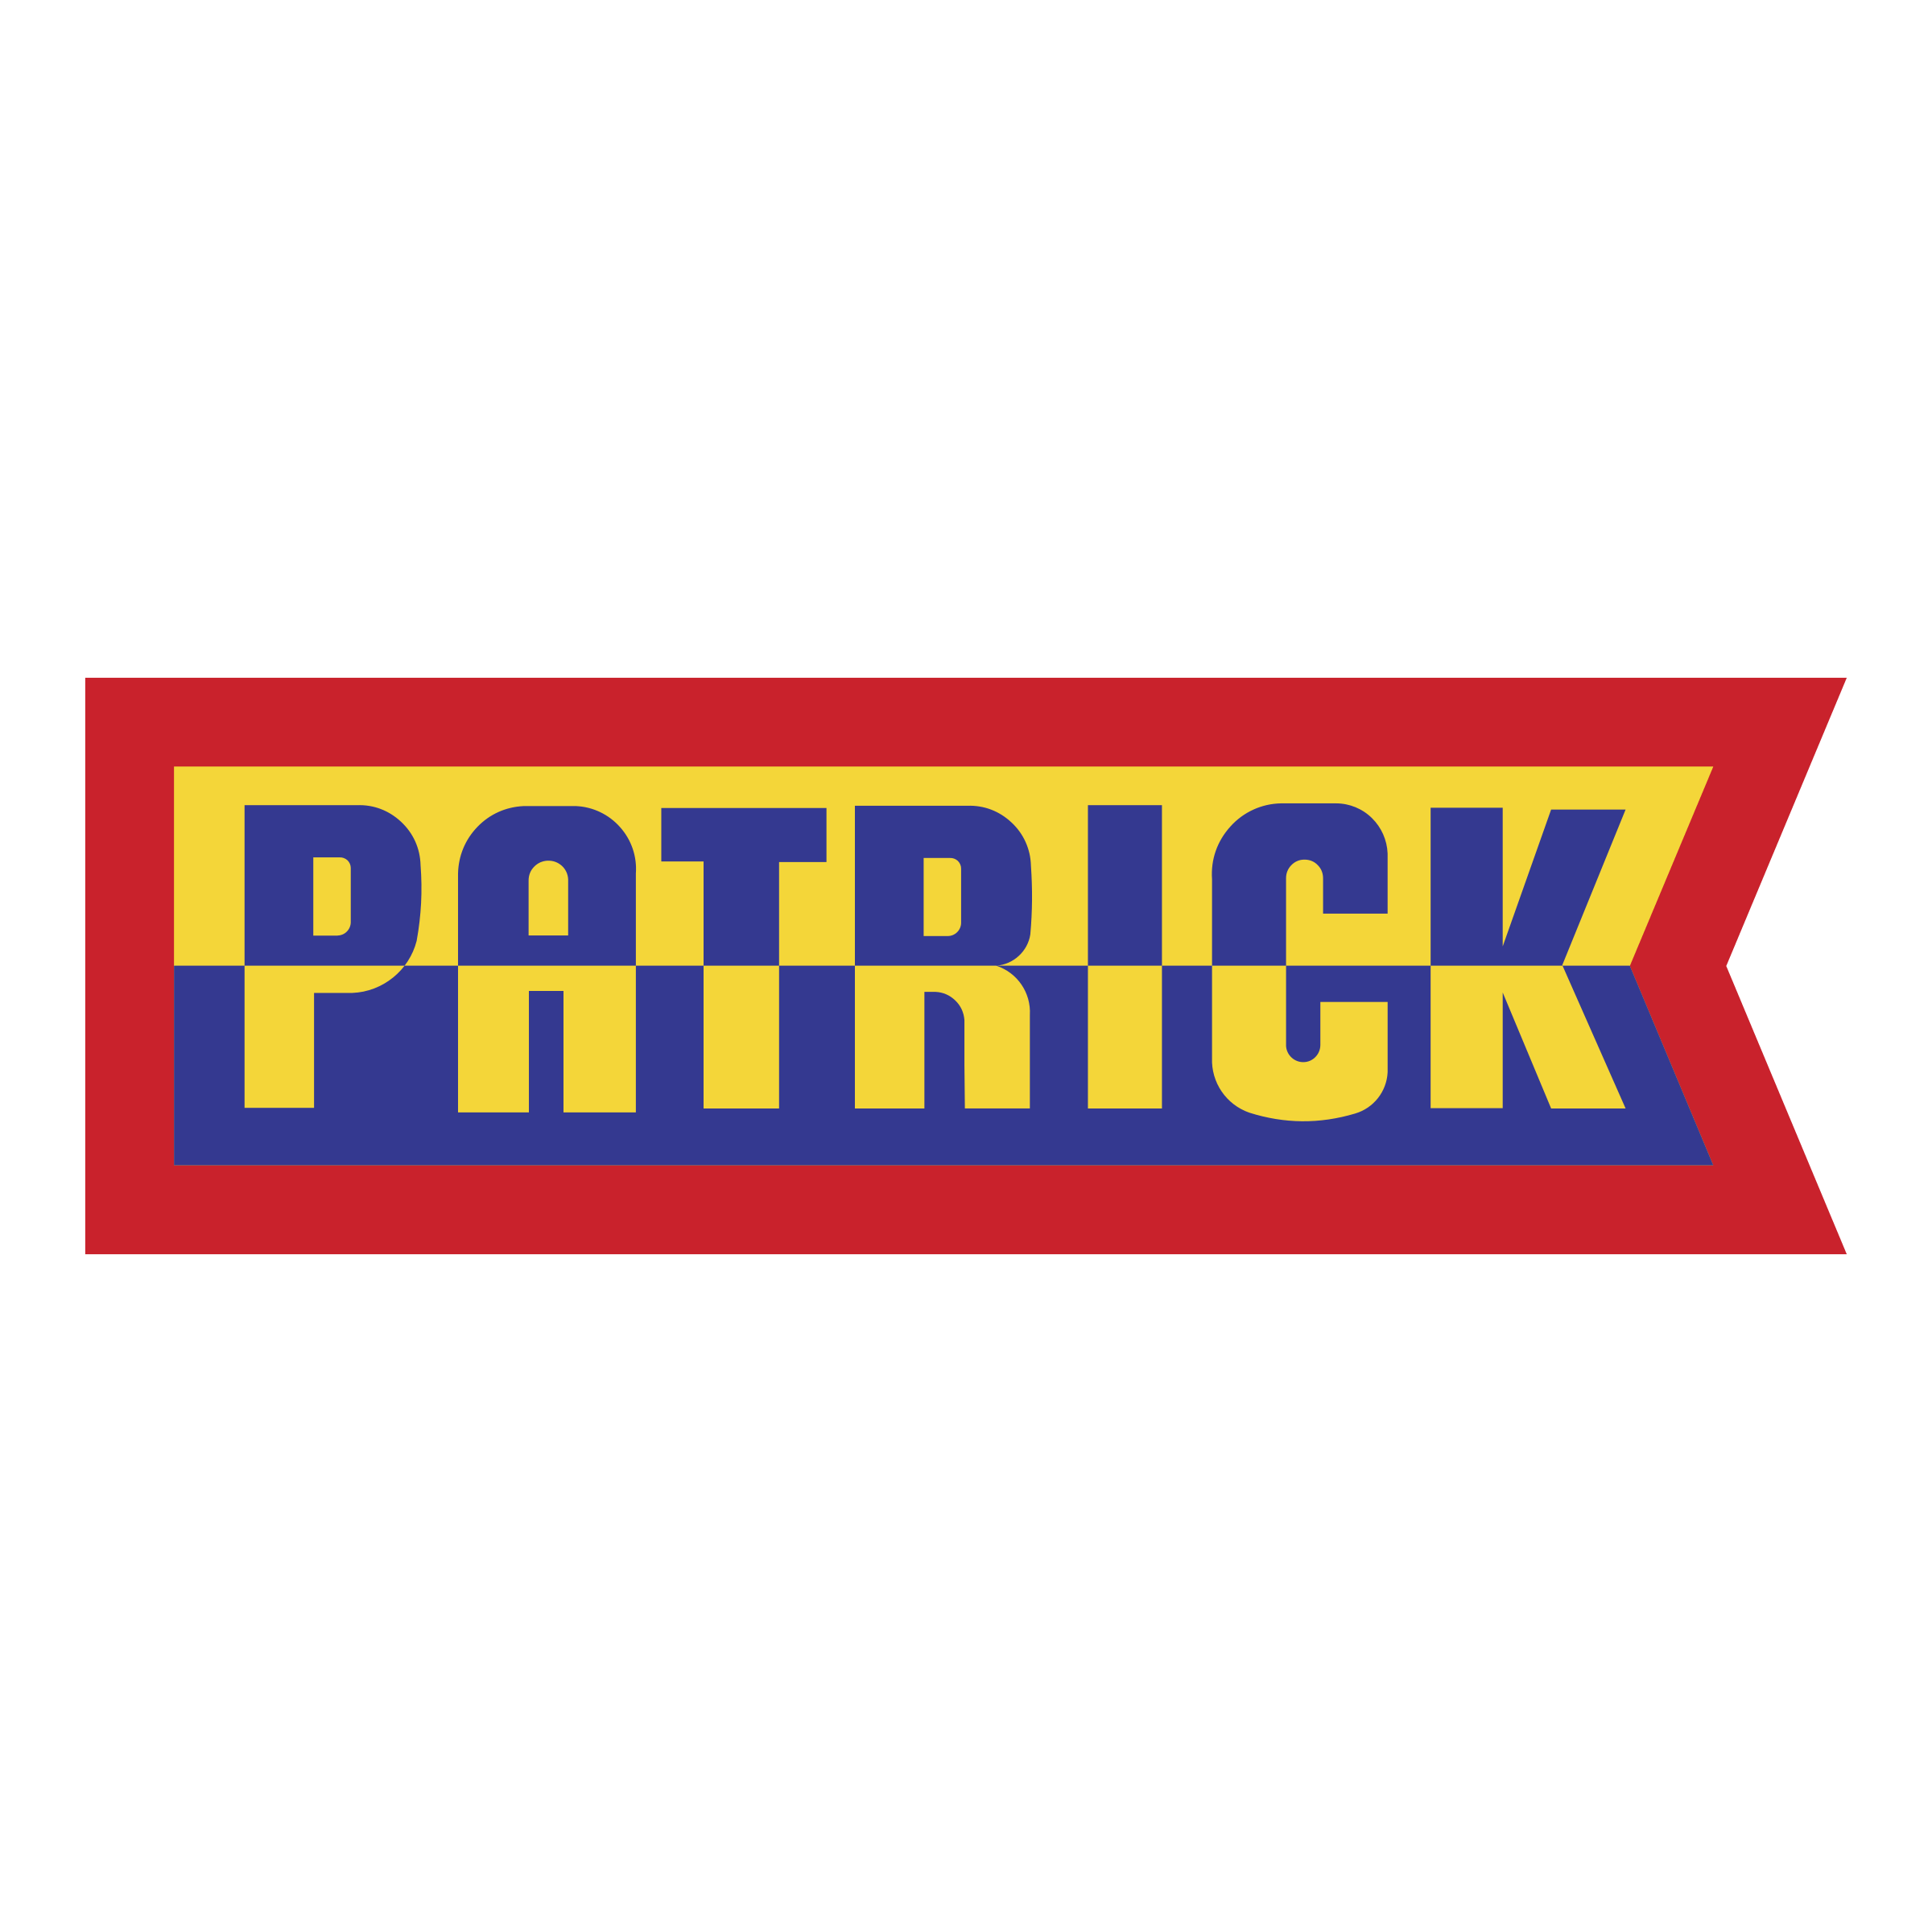 Patrick Logo - Patrick Logo PNG Transparent & SVG Vector